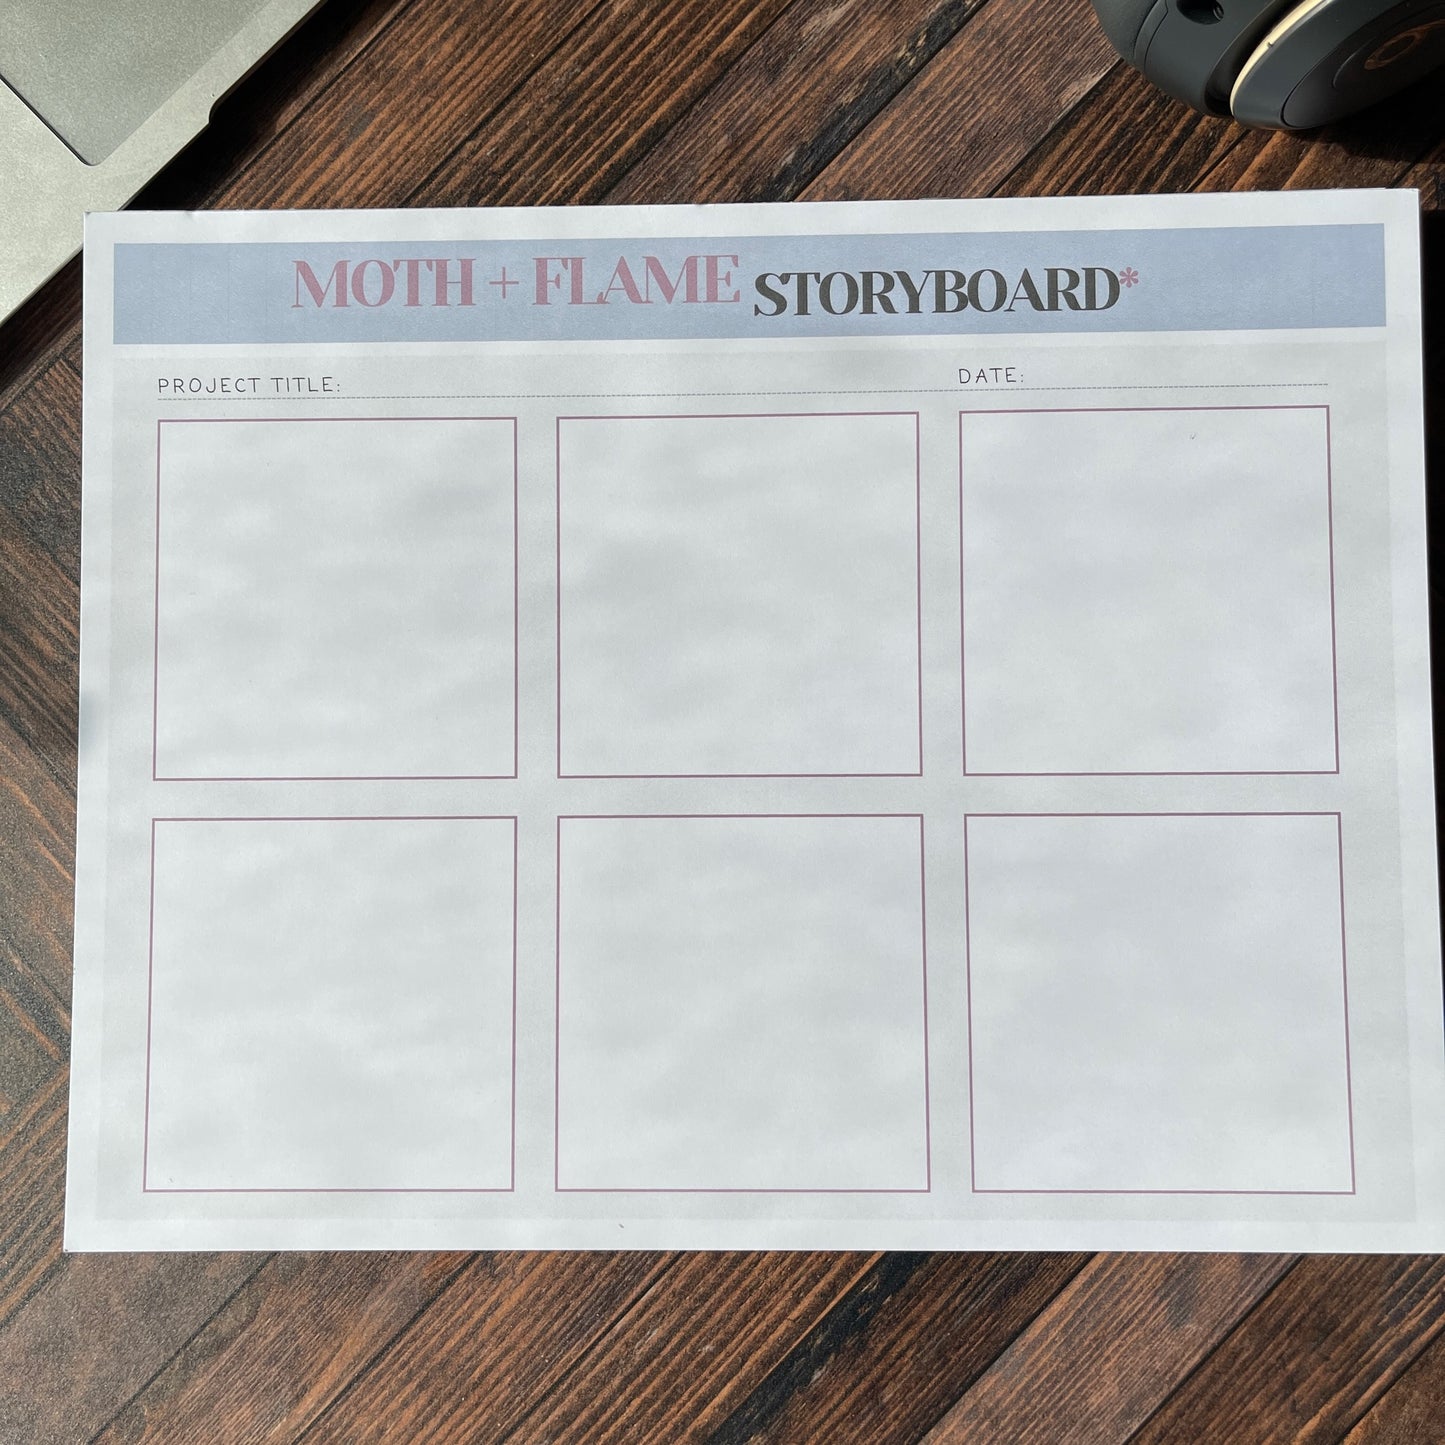 Moth+Flame: Storyboard Pad